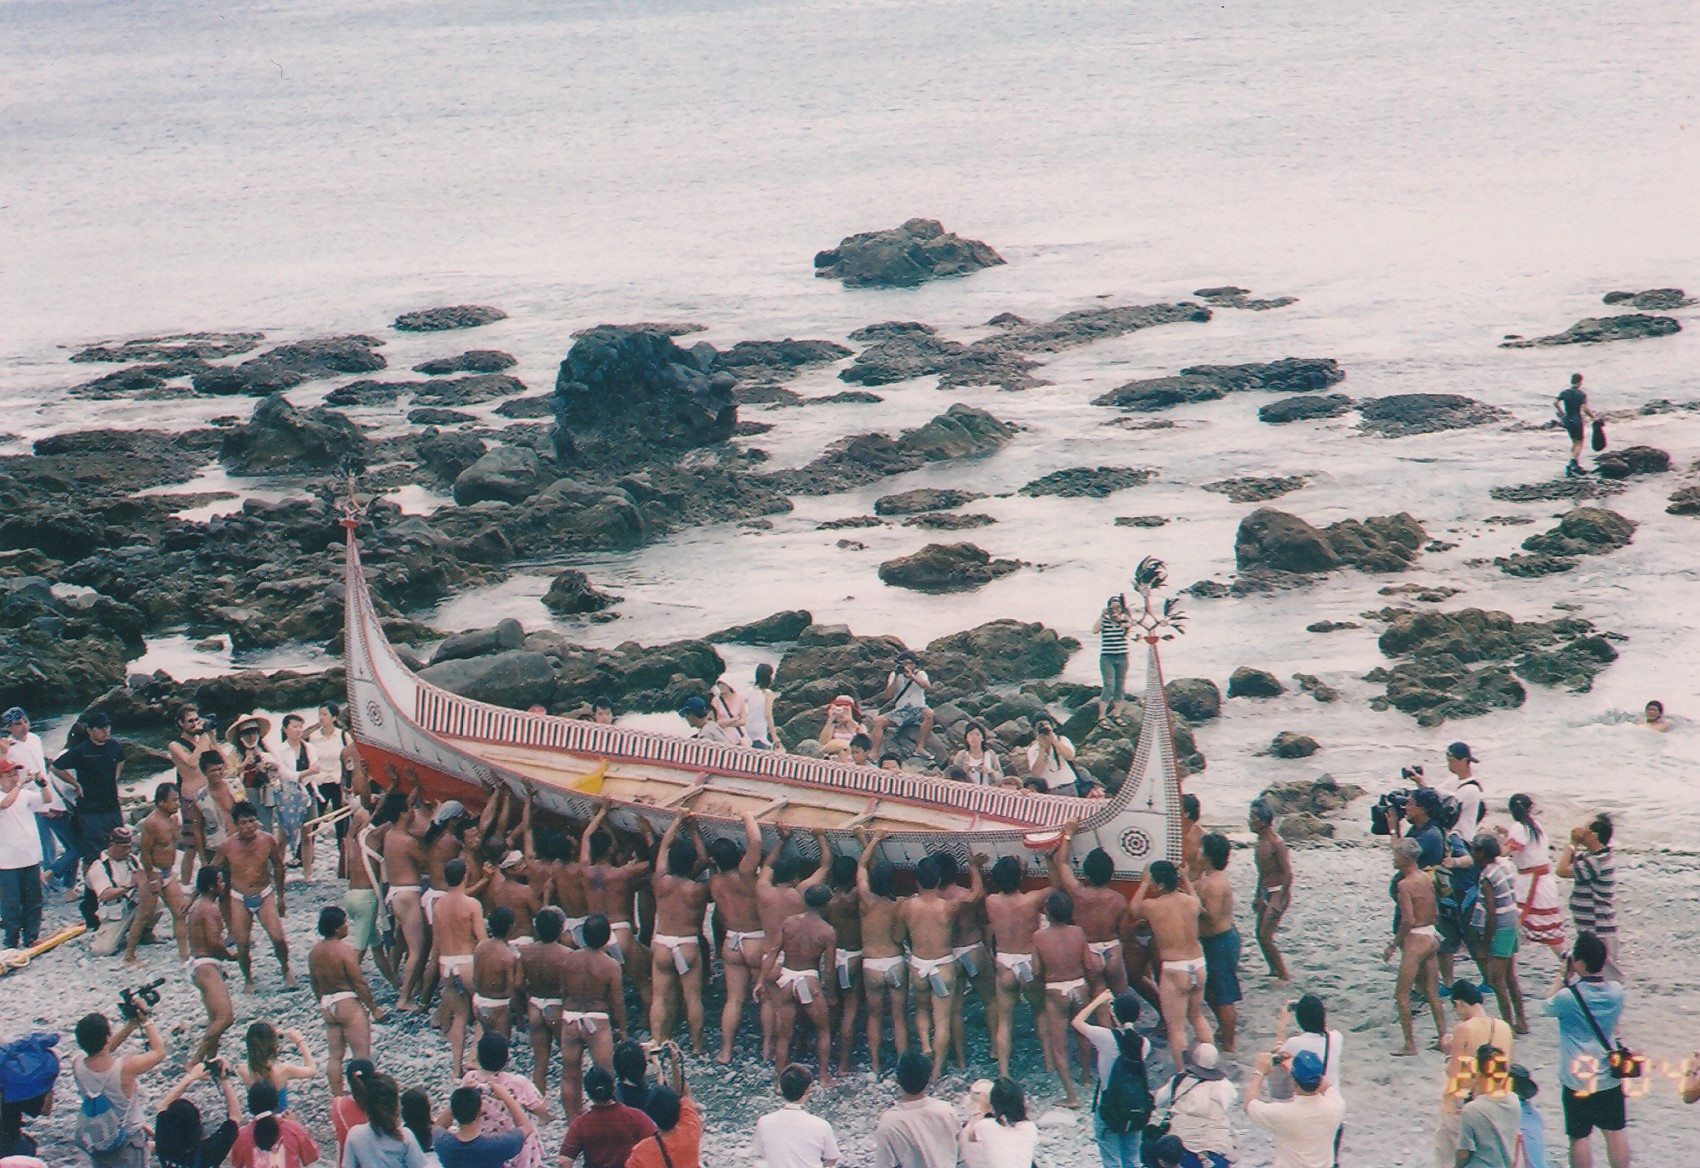 Yami fishing boat ceremony